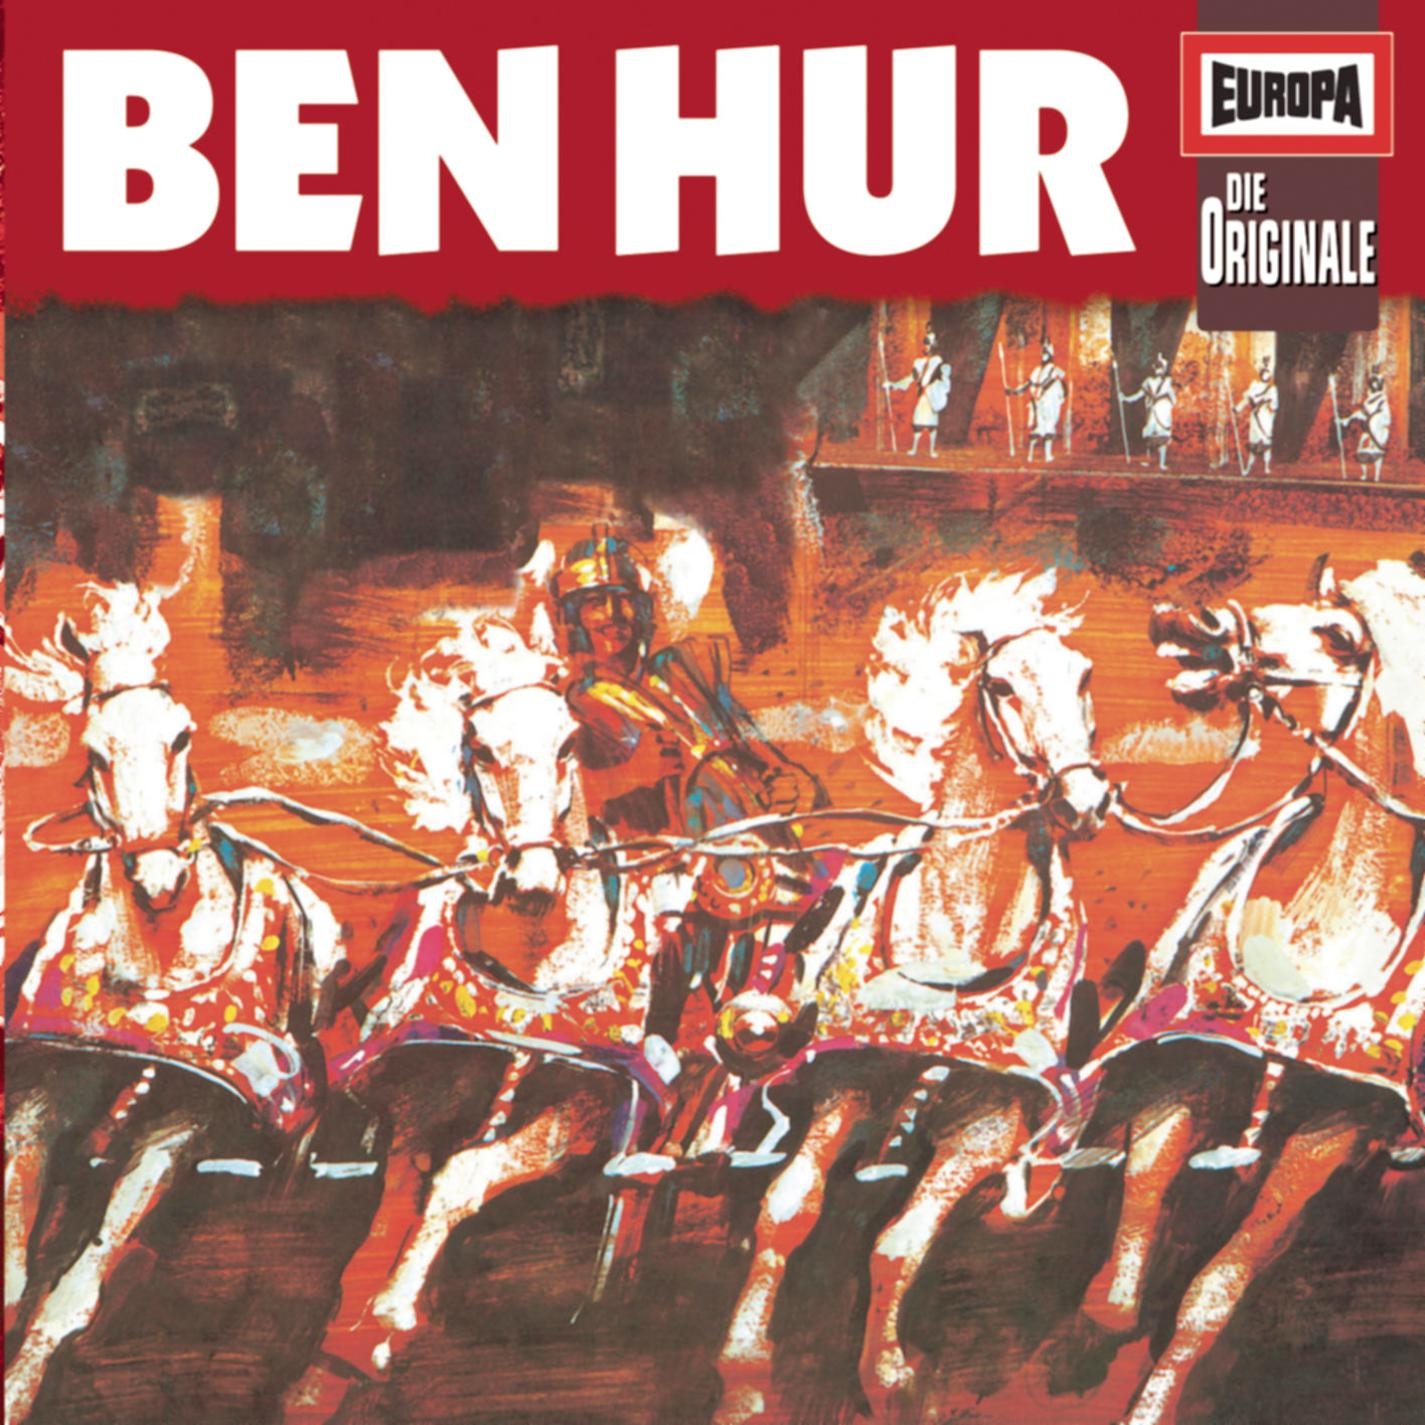  Die Originale: Ben Hur